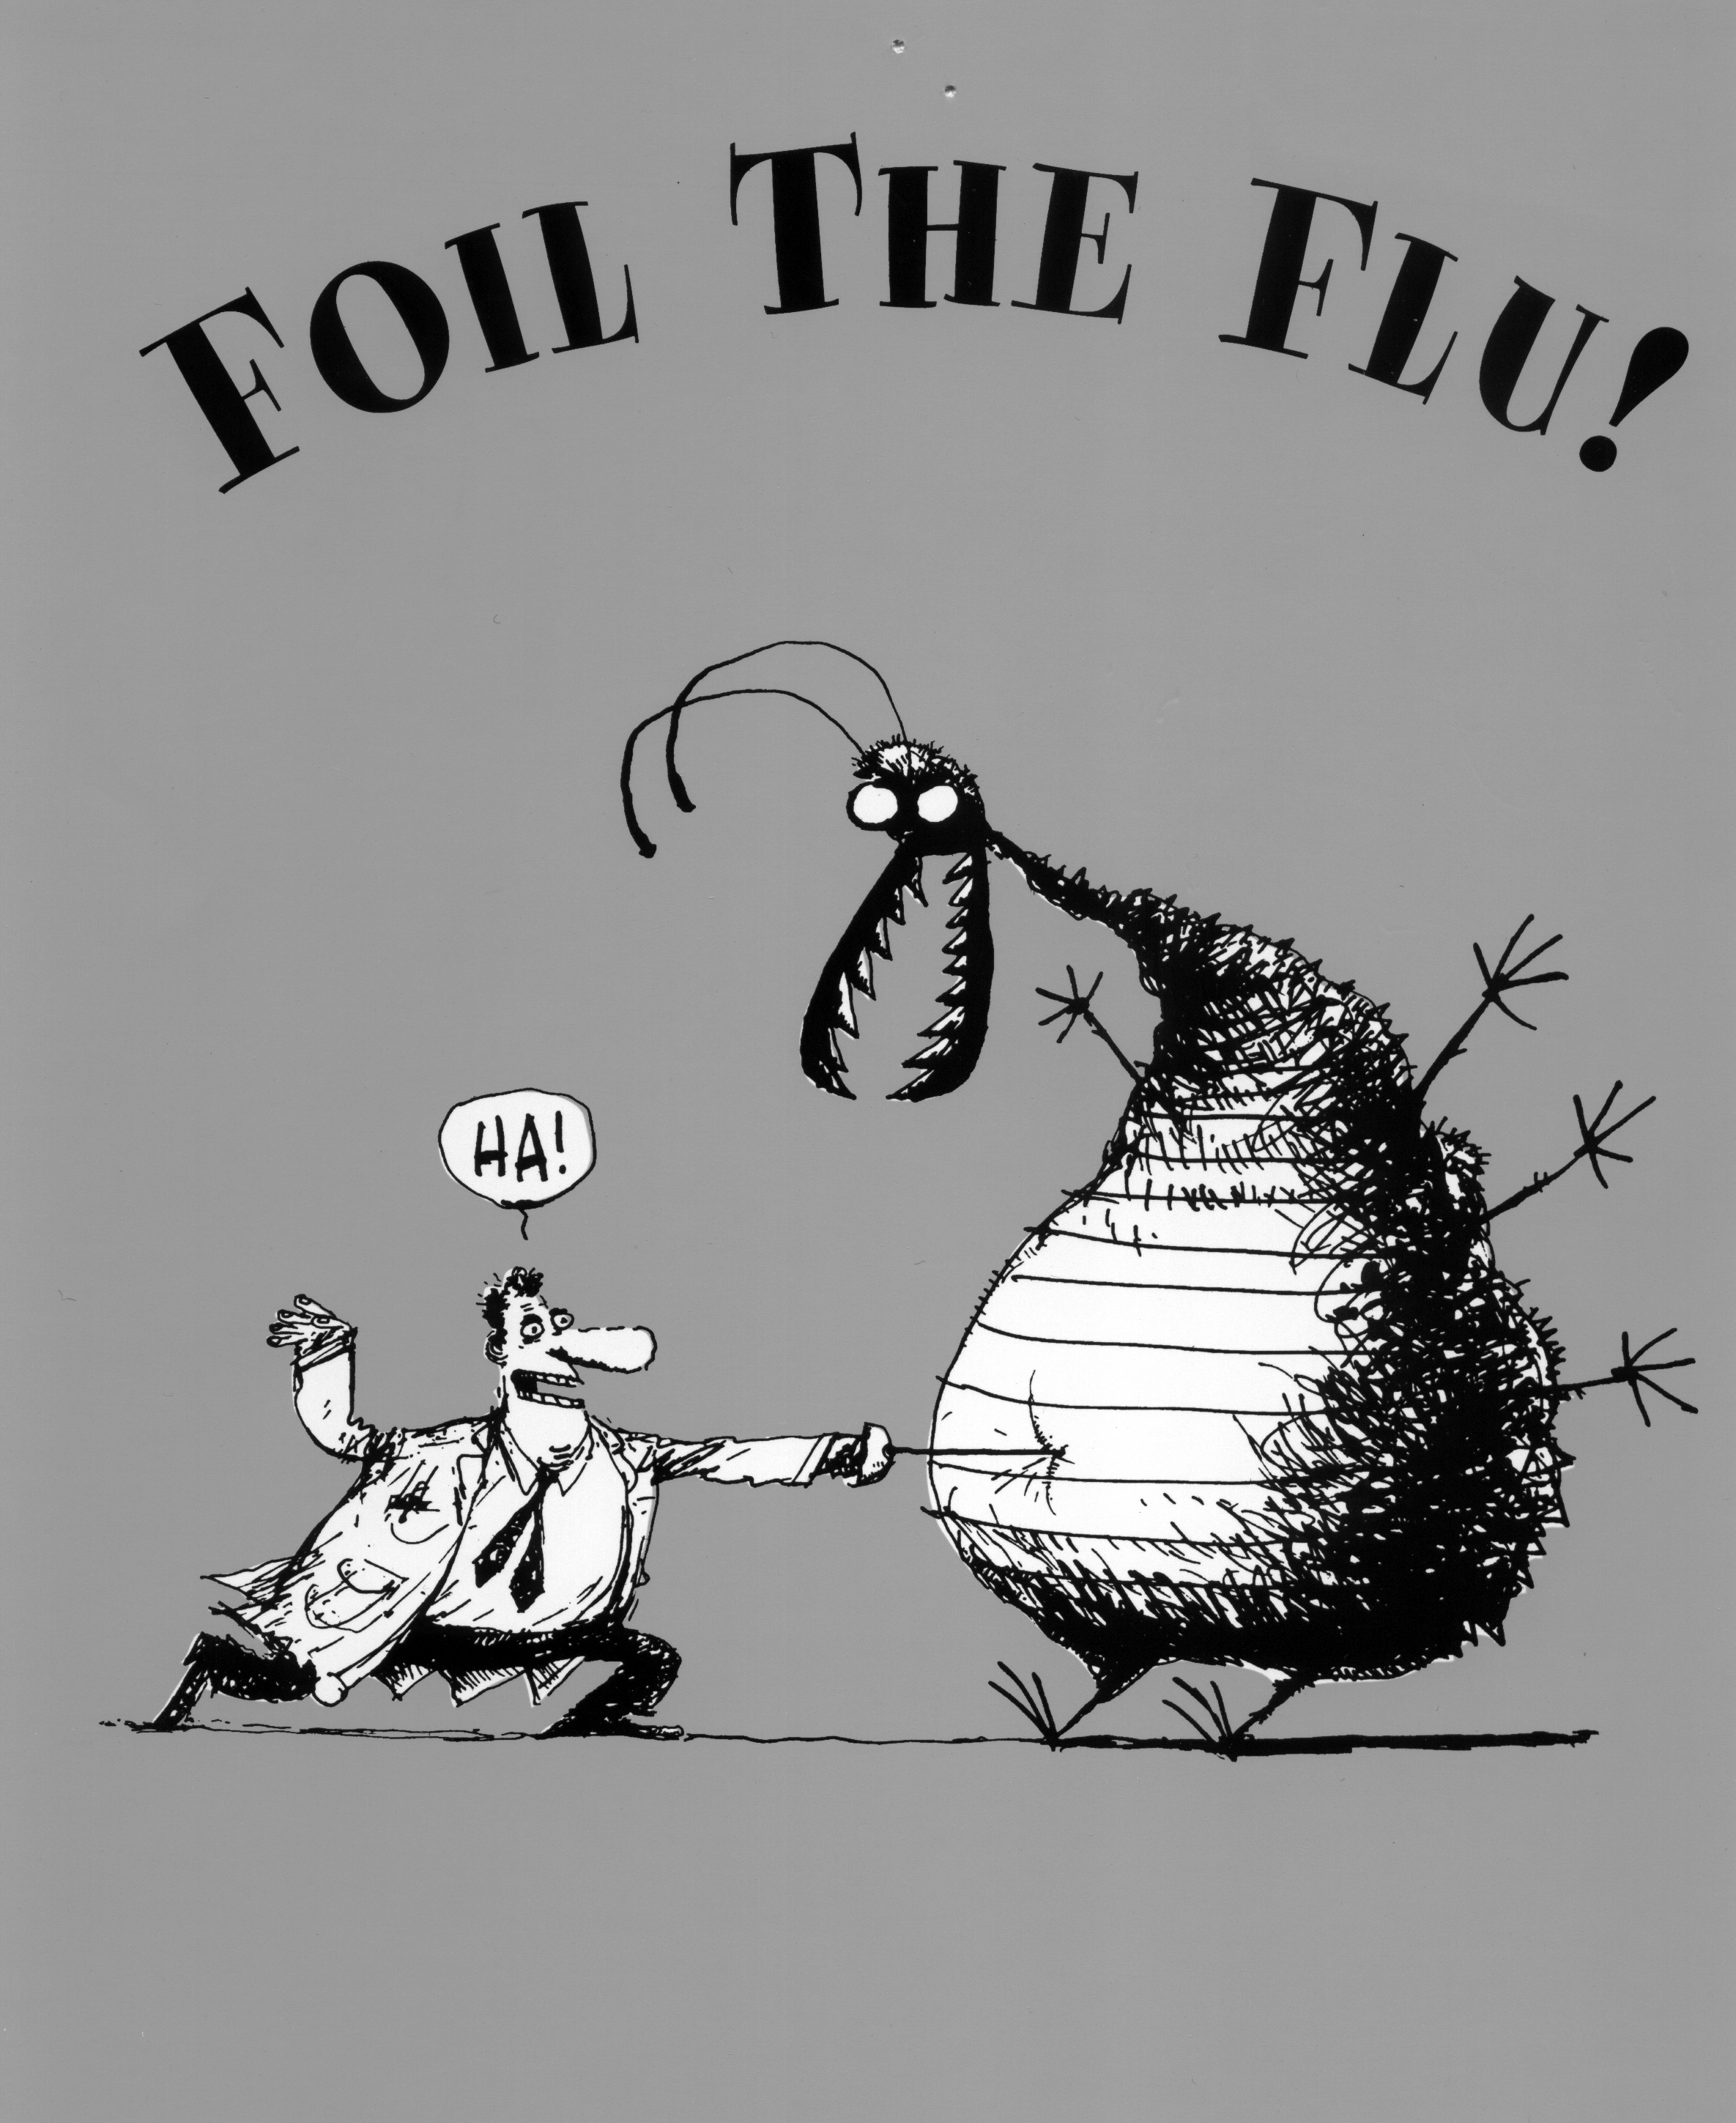 Foil the flu